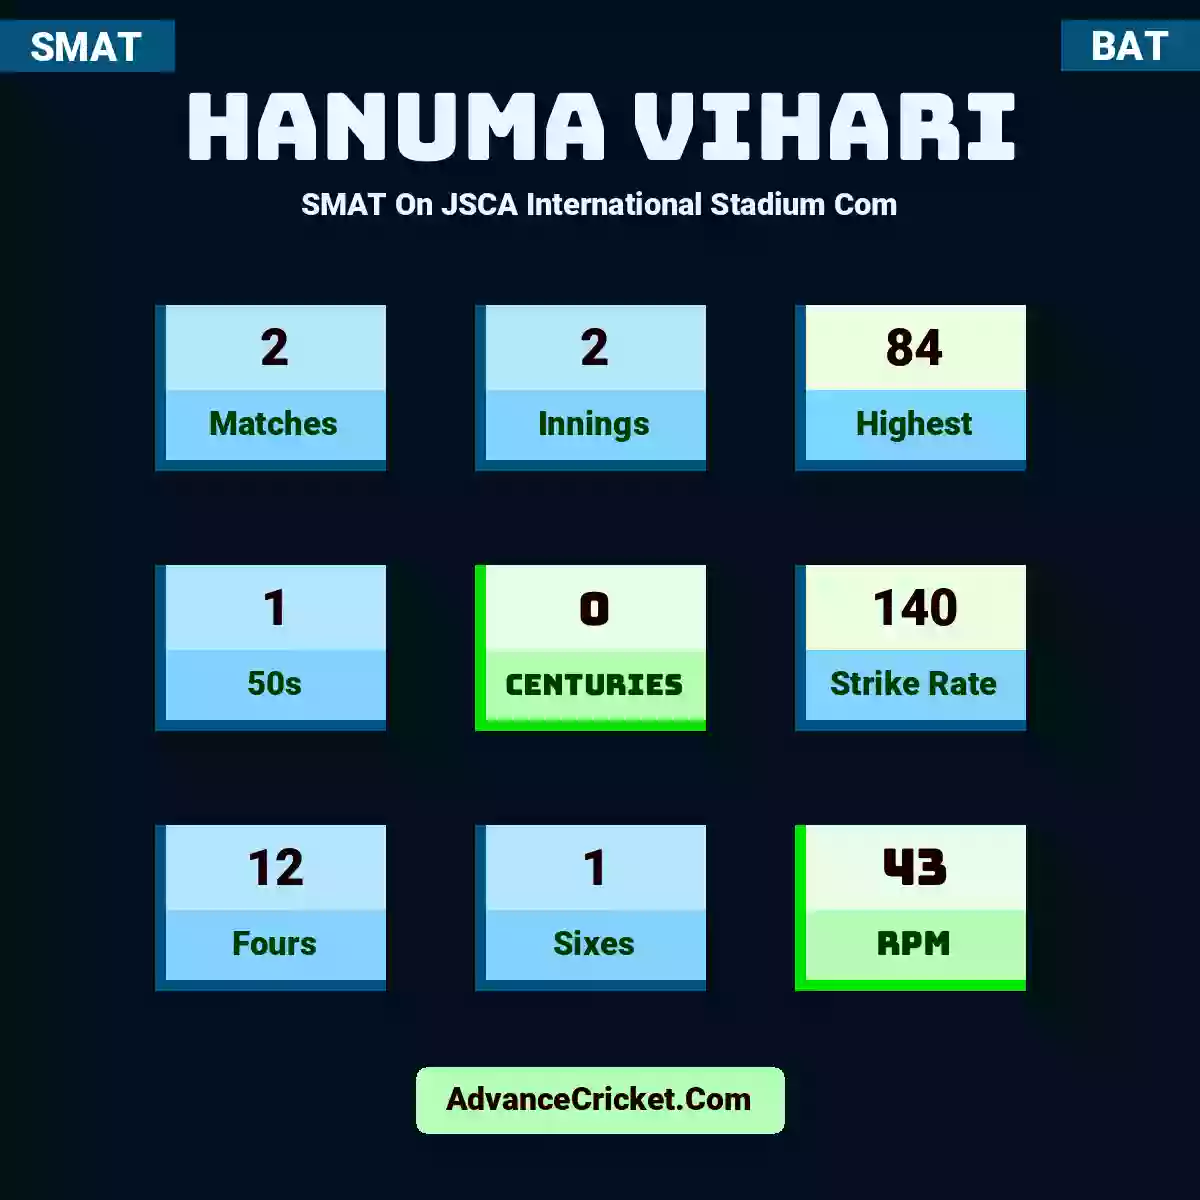 Hanuma Vihari SMAT  On JSCA International Stadium Com, Hanuma Vihari played 2 matches, scored 84 runs as highest, 1 half-centuries, and 0 centuries, with a strike rate of 140. H.Vihari hit 12 fours and 1 sixes, with an RPM of 43.